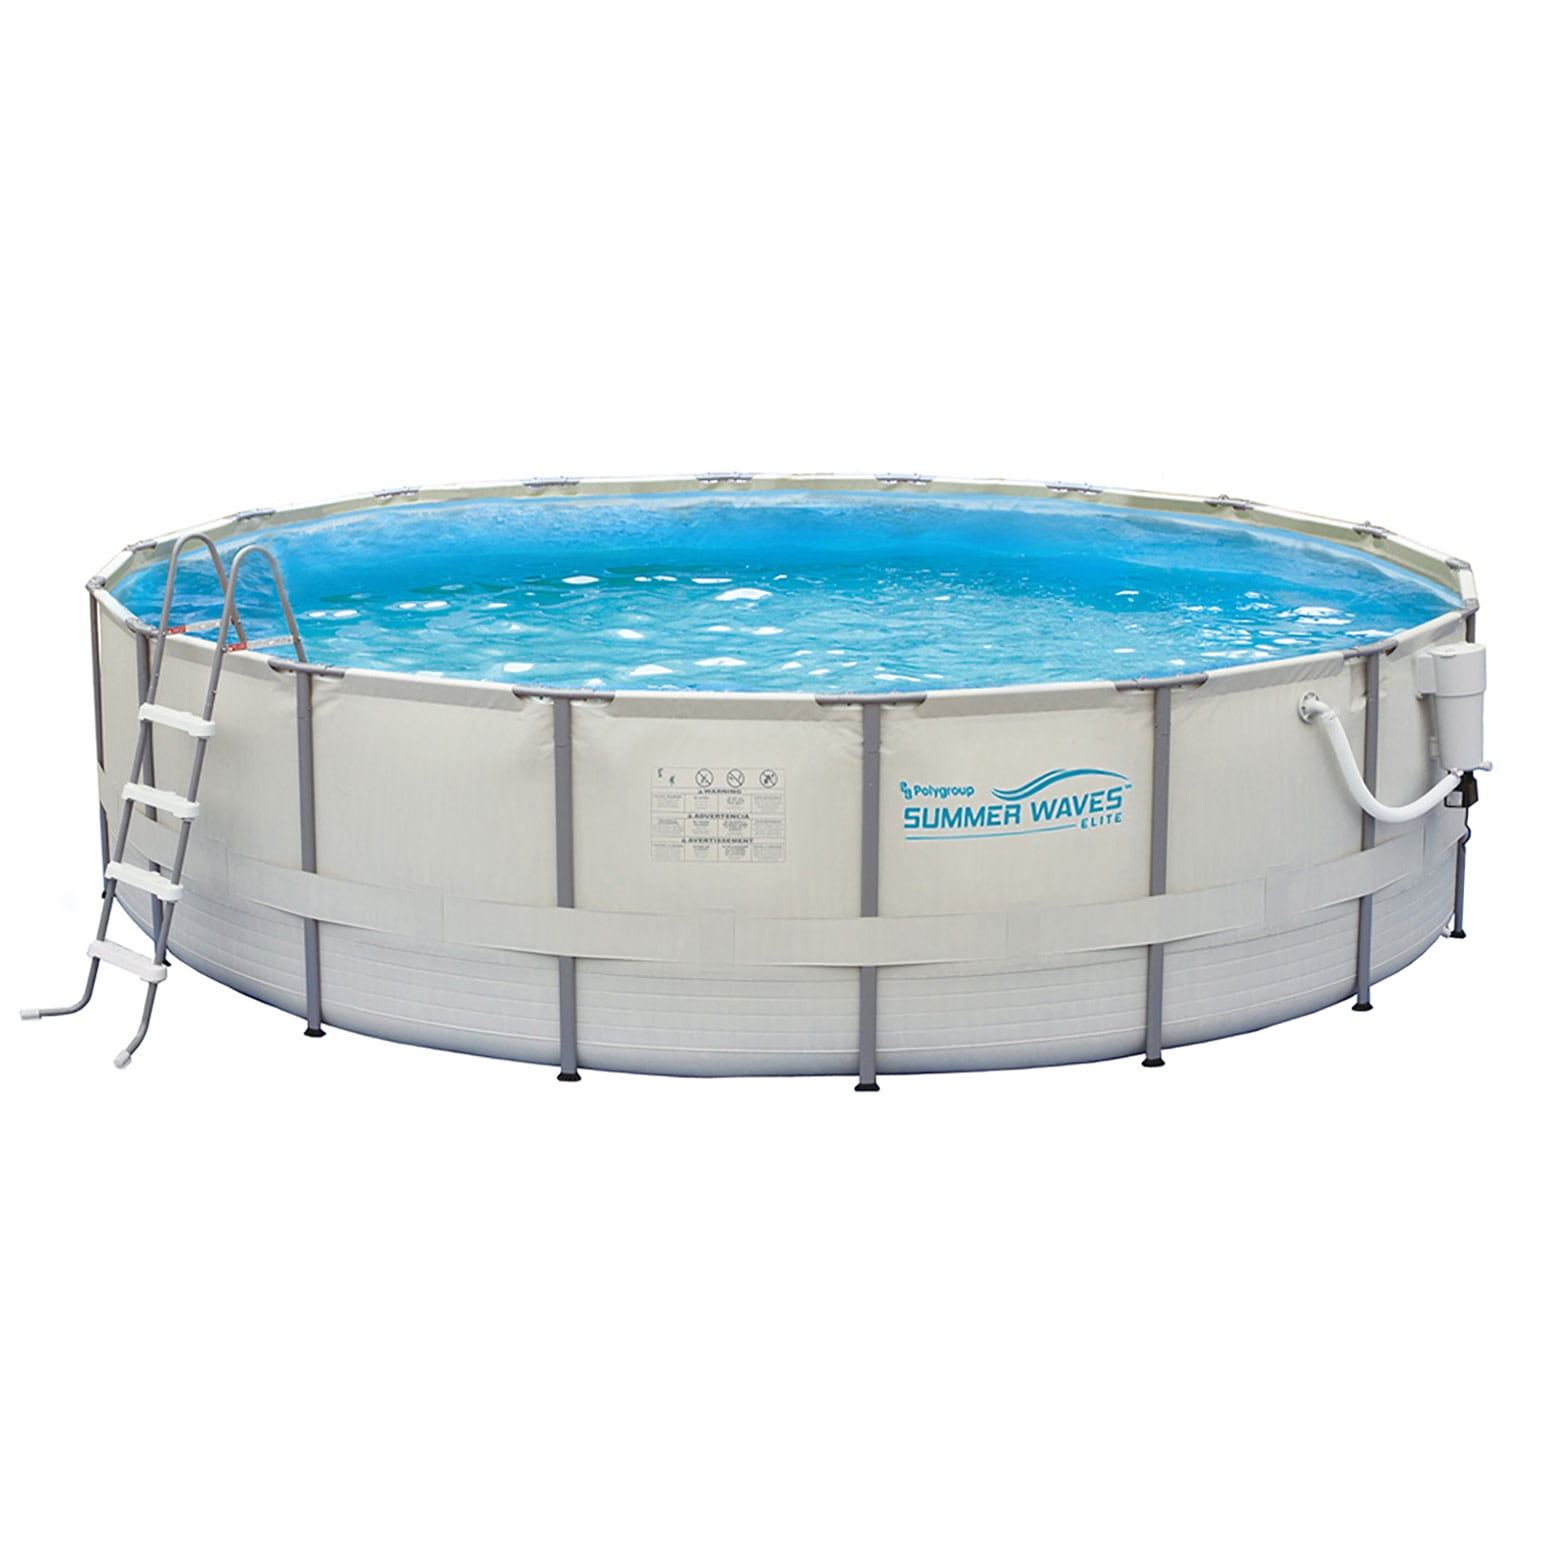 How much water is in an 18 foot round pool Summer Waves Elite 18 Ft Round 52 In Deep Metal Frame Swimming Pool Package Walmart Com Walmart Com